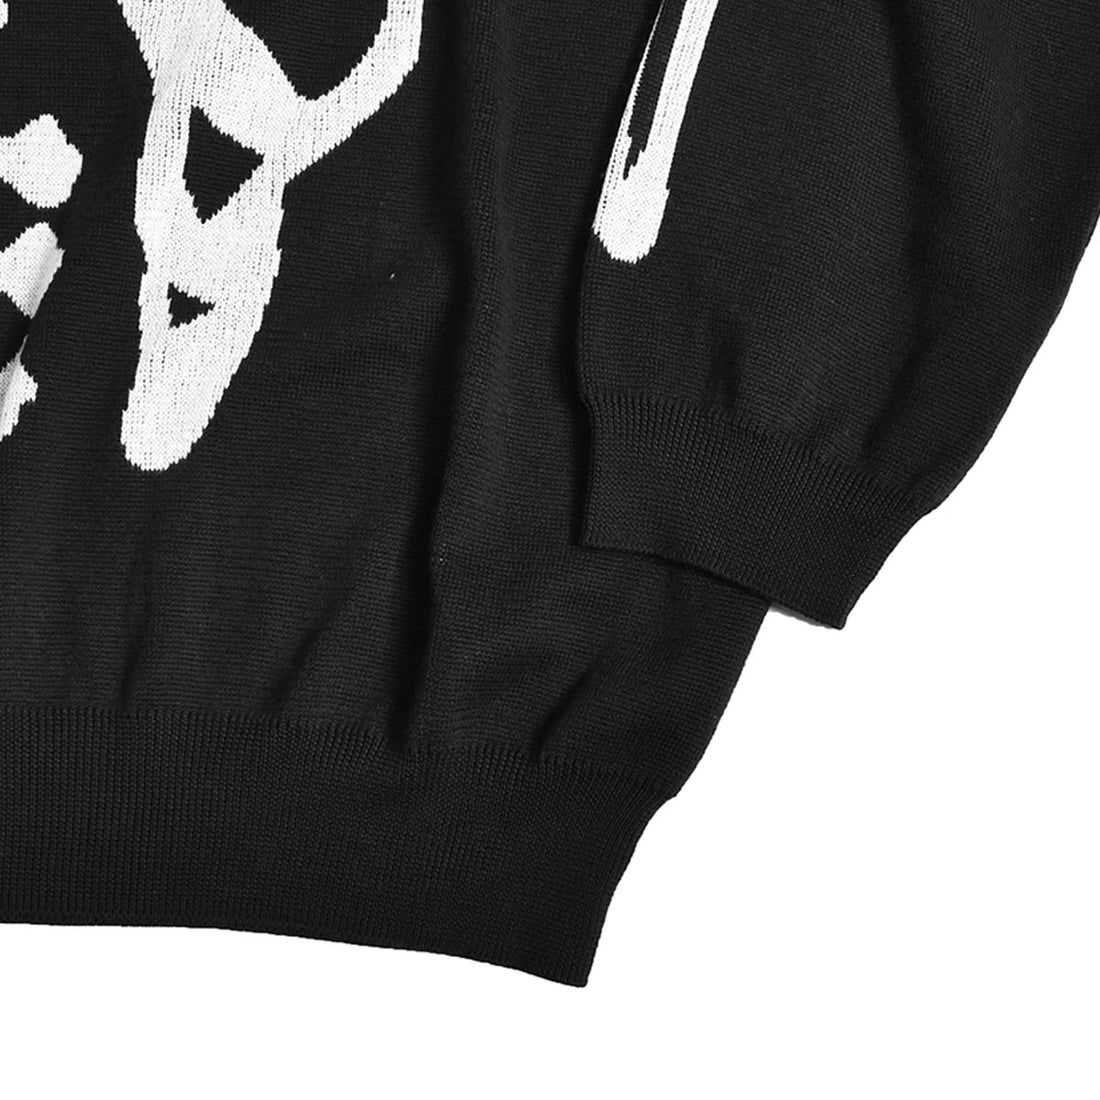 【TAKAHIRO MIYASHITA TheSoloIst】crew neck sweater.(bone)/BLACK/(sk.0001dSS24)